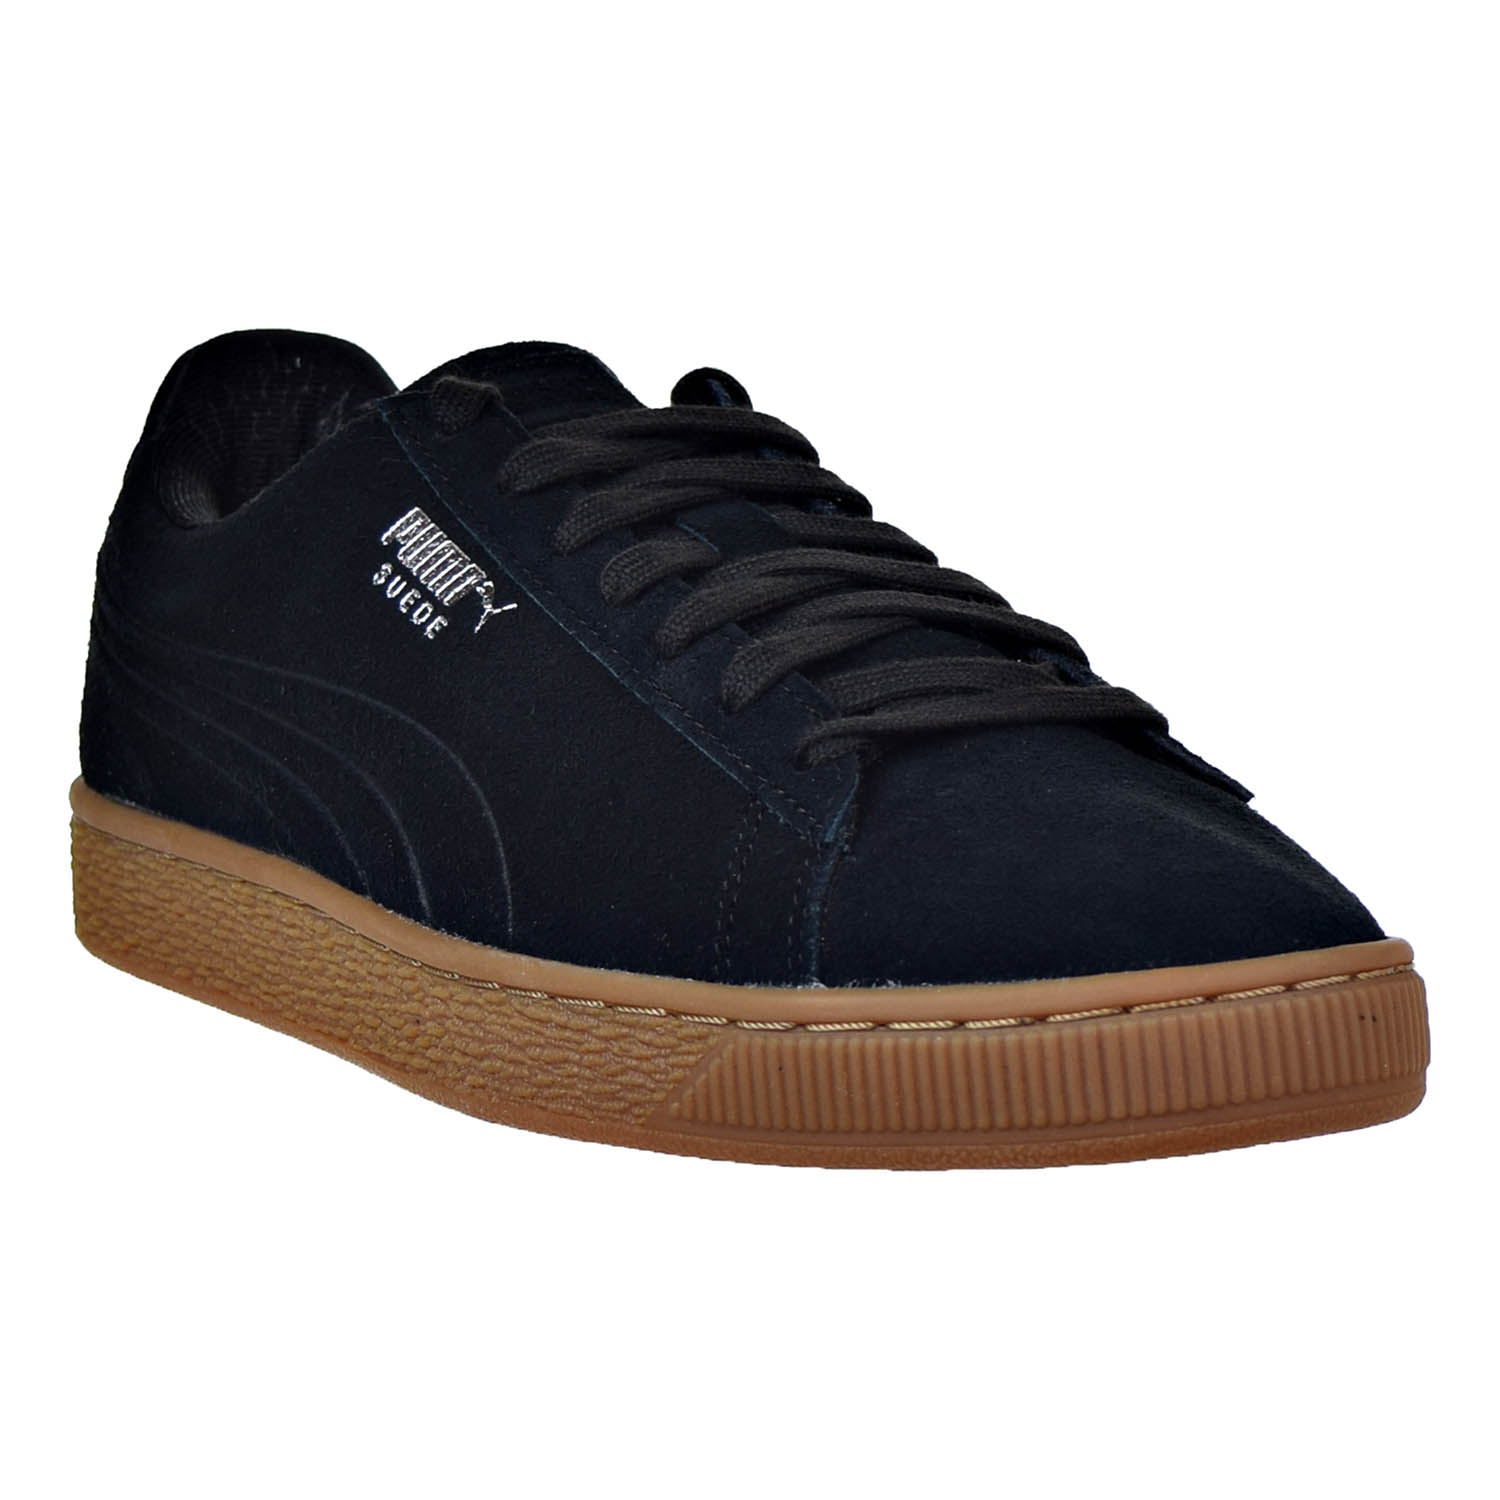 Puma Suede Classic Debossed Q4 Men's Shoes Puma Black/Glacier Grey 361098-02 - image 2 of 6